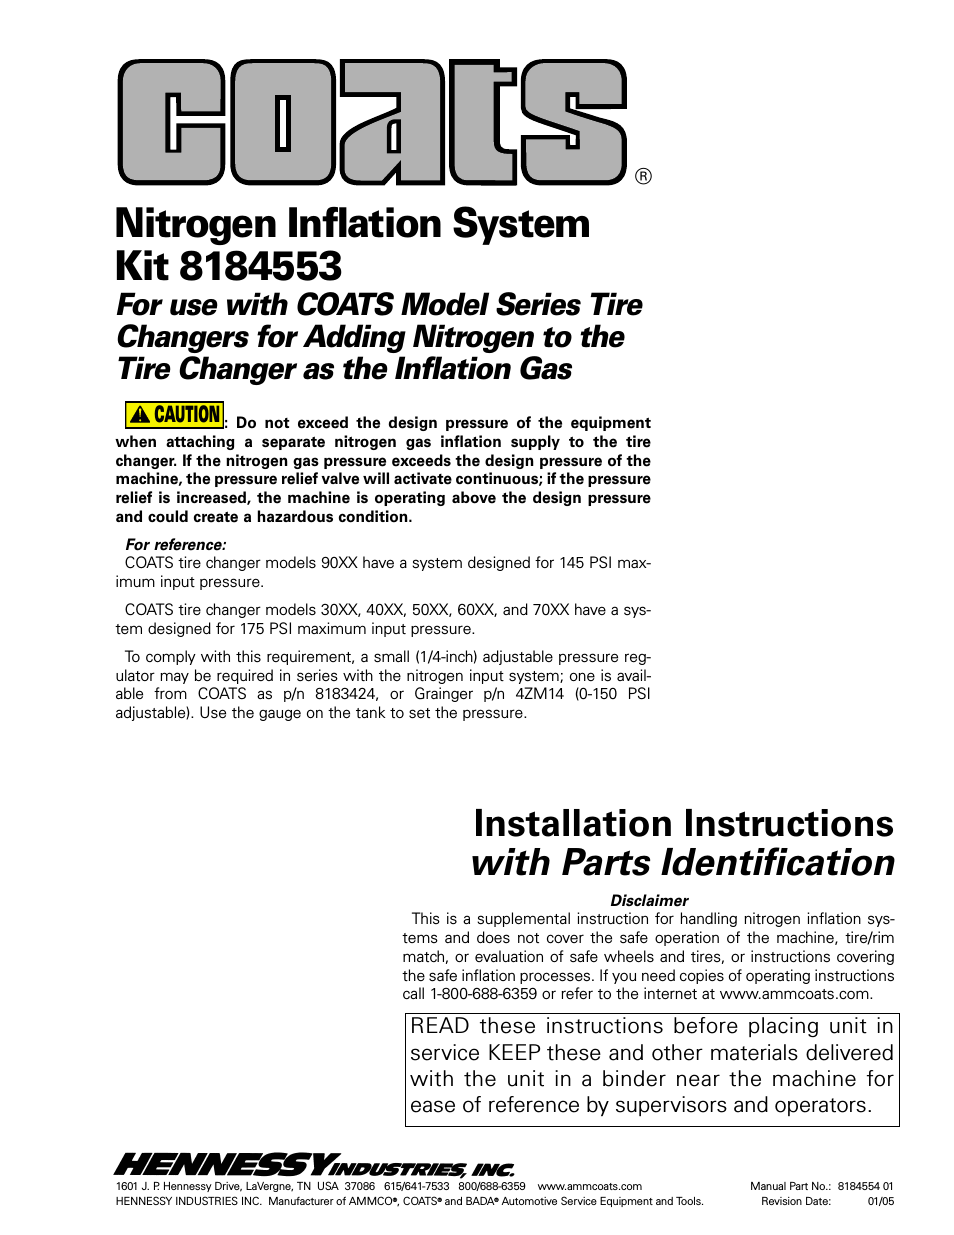 Kit 8184553, Nitrogen Inflation System